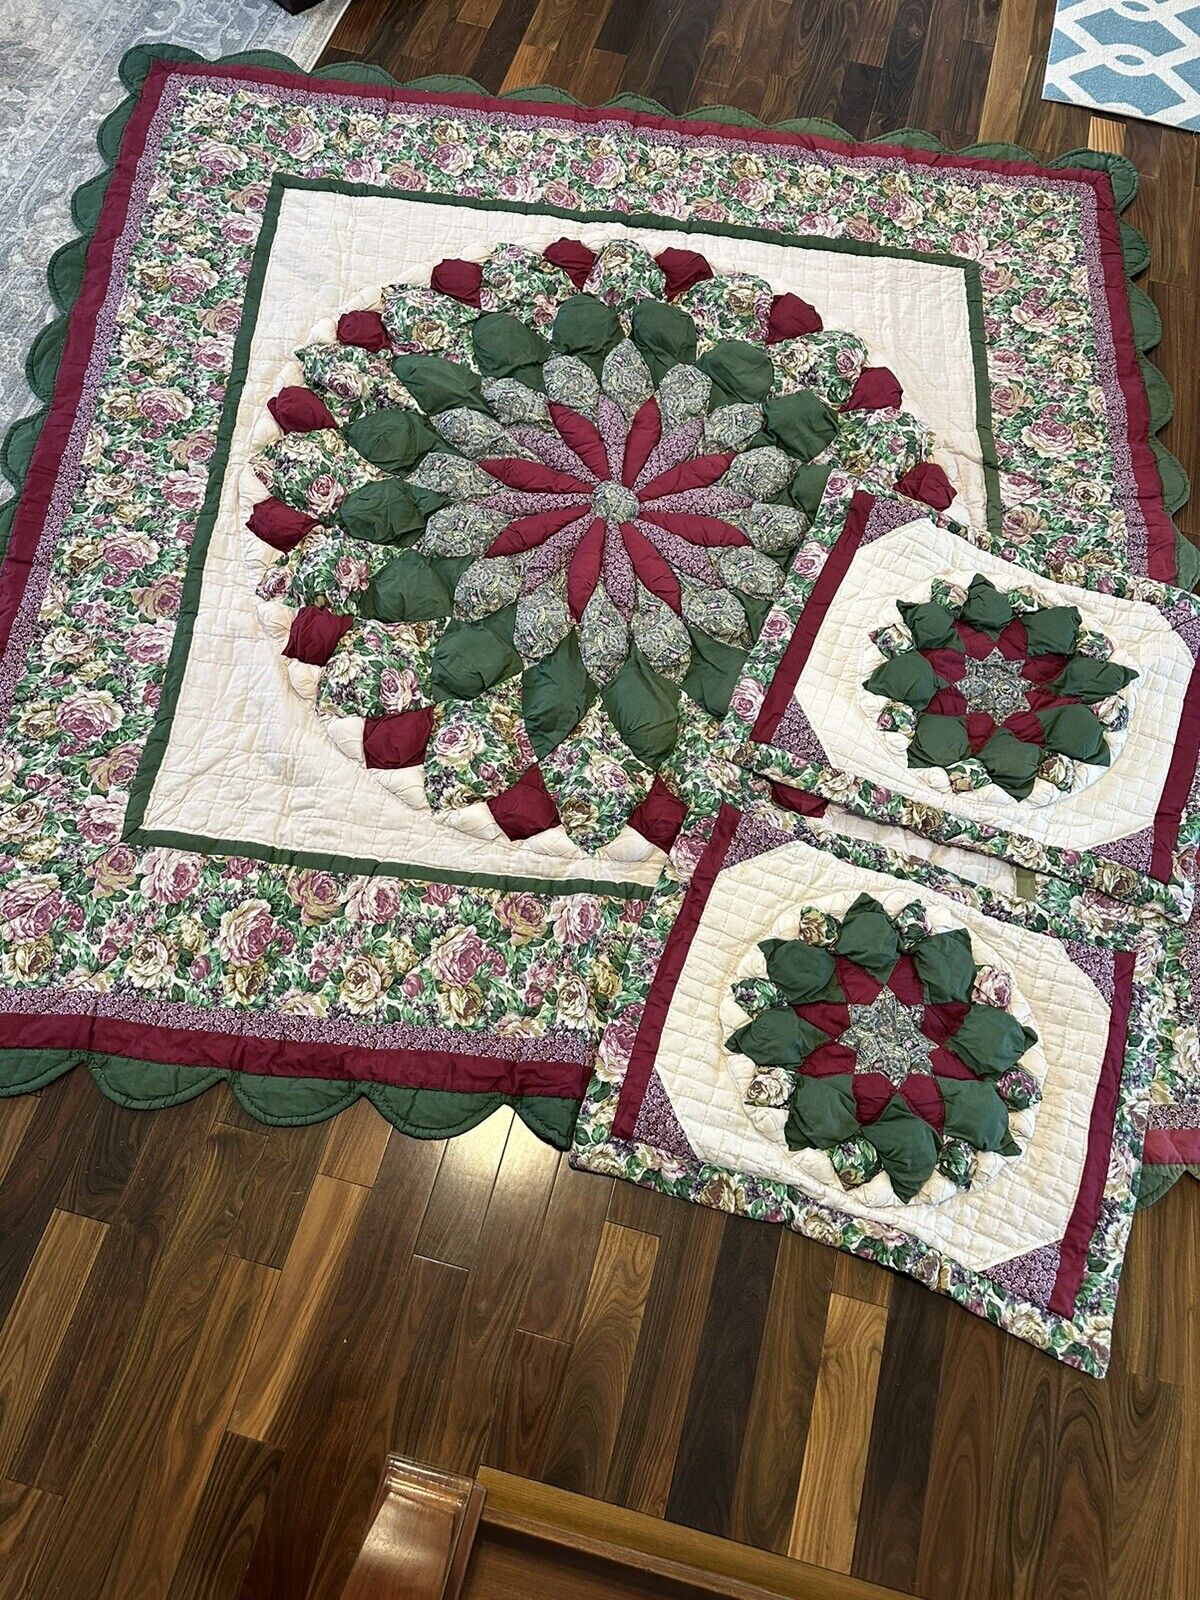 Sunham Vintage Quilt Hand stitched cotton embroidered flower 82”x82” 90s Floral